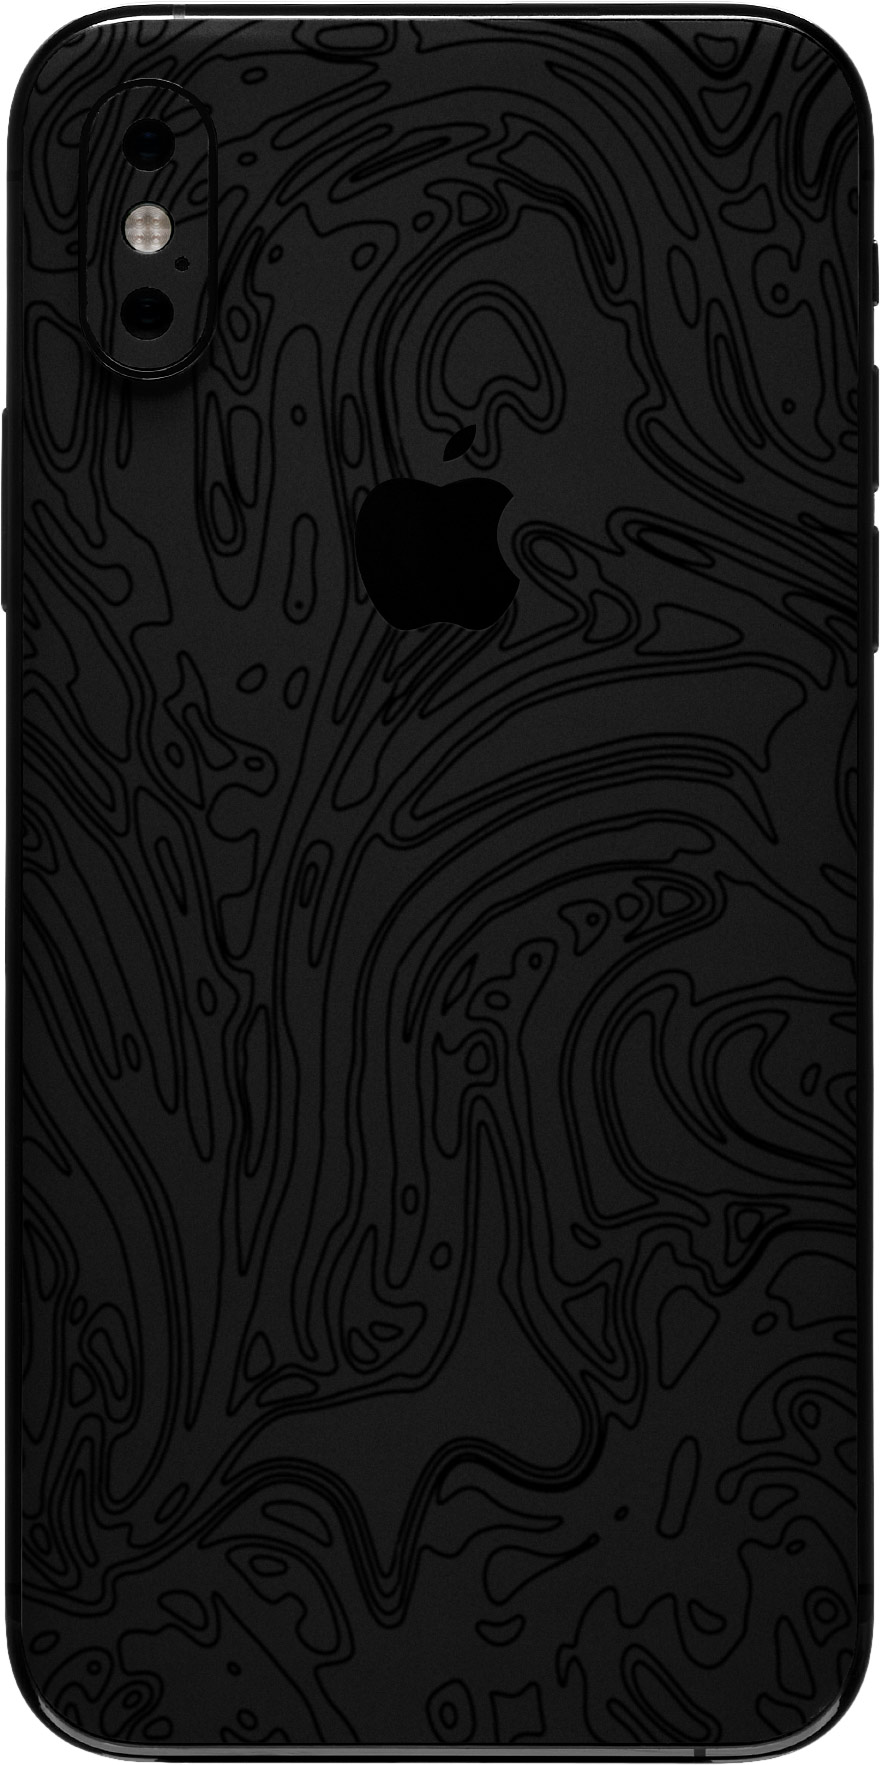 LOUIS VUITTON LOGO GREEN ICON PATTERN iPhone X / XS Case Cover